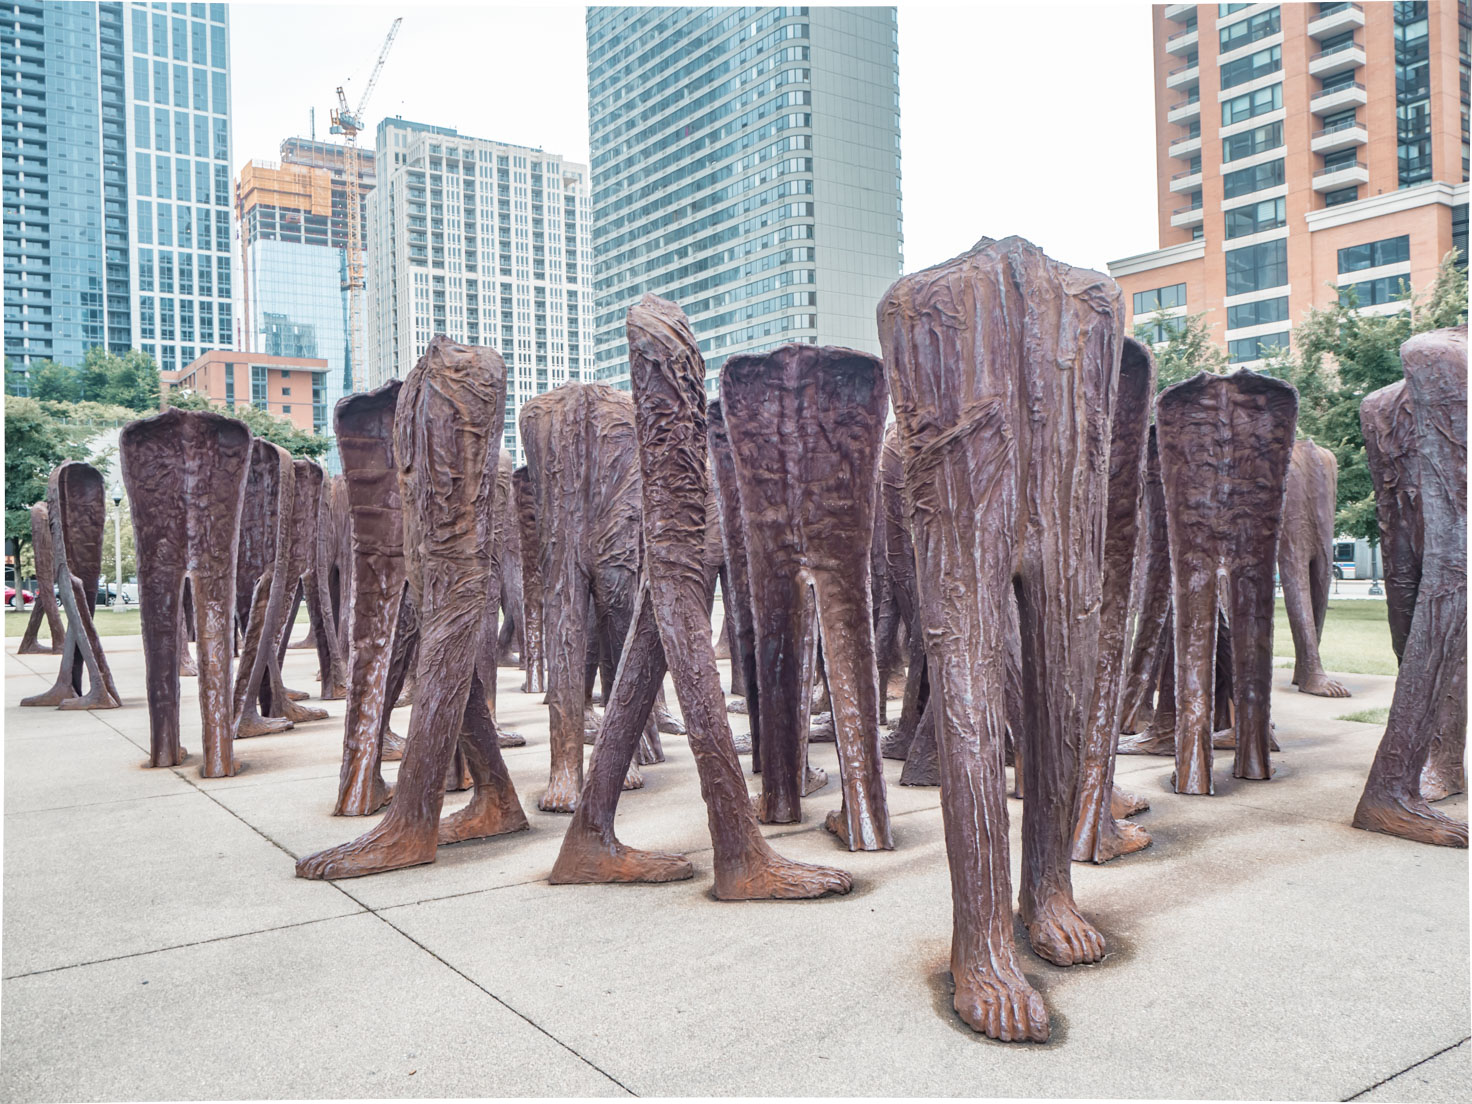 Agora headless sculpture in Millennium park Chicago 